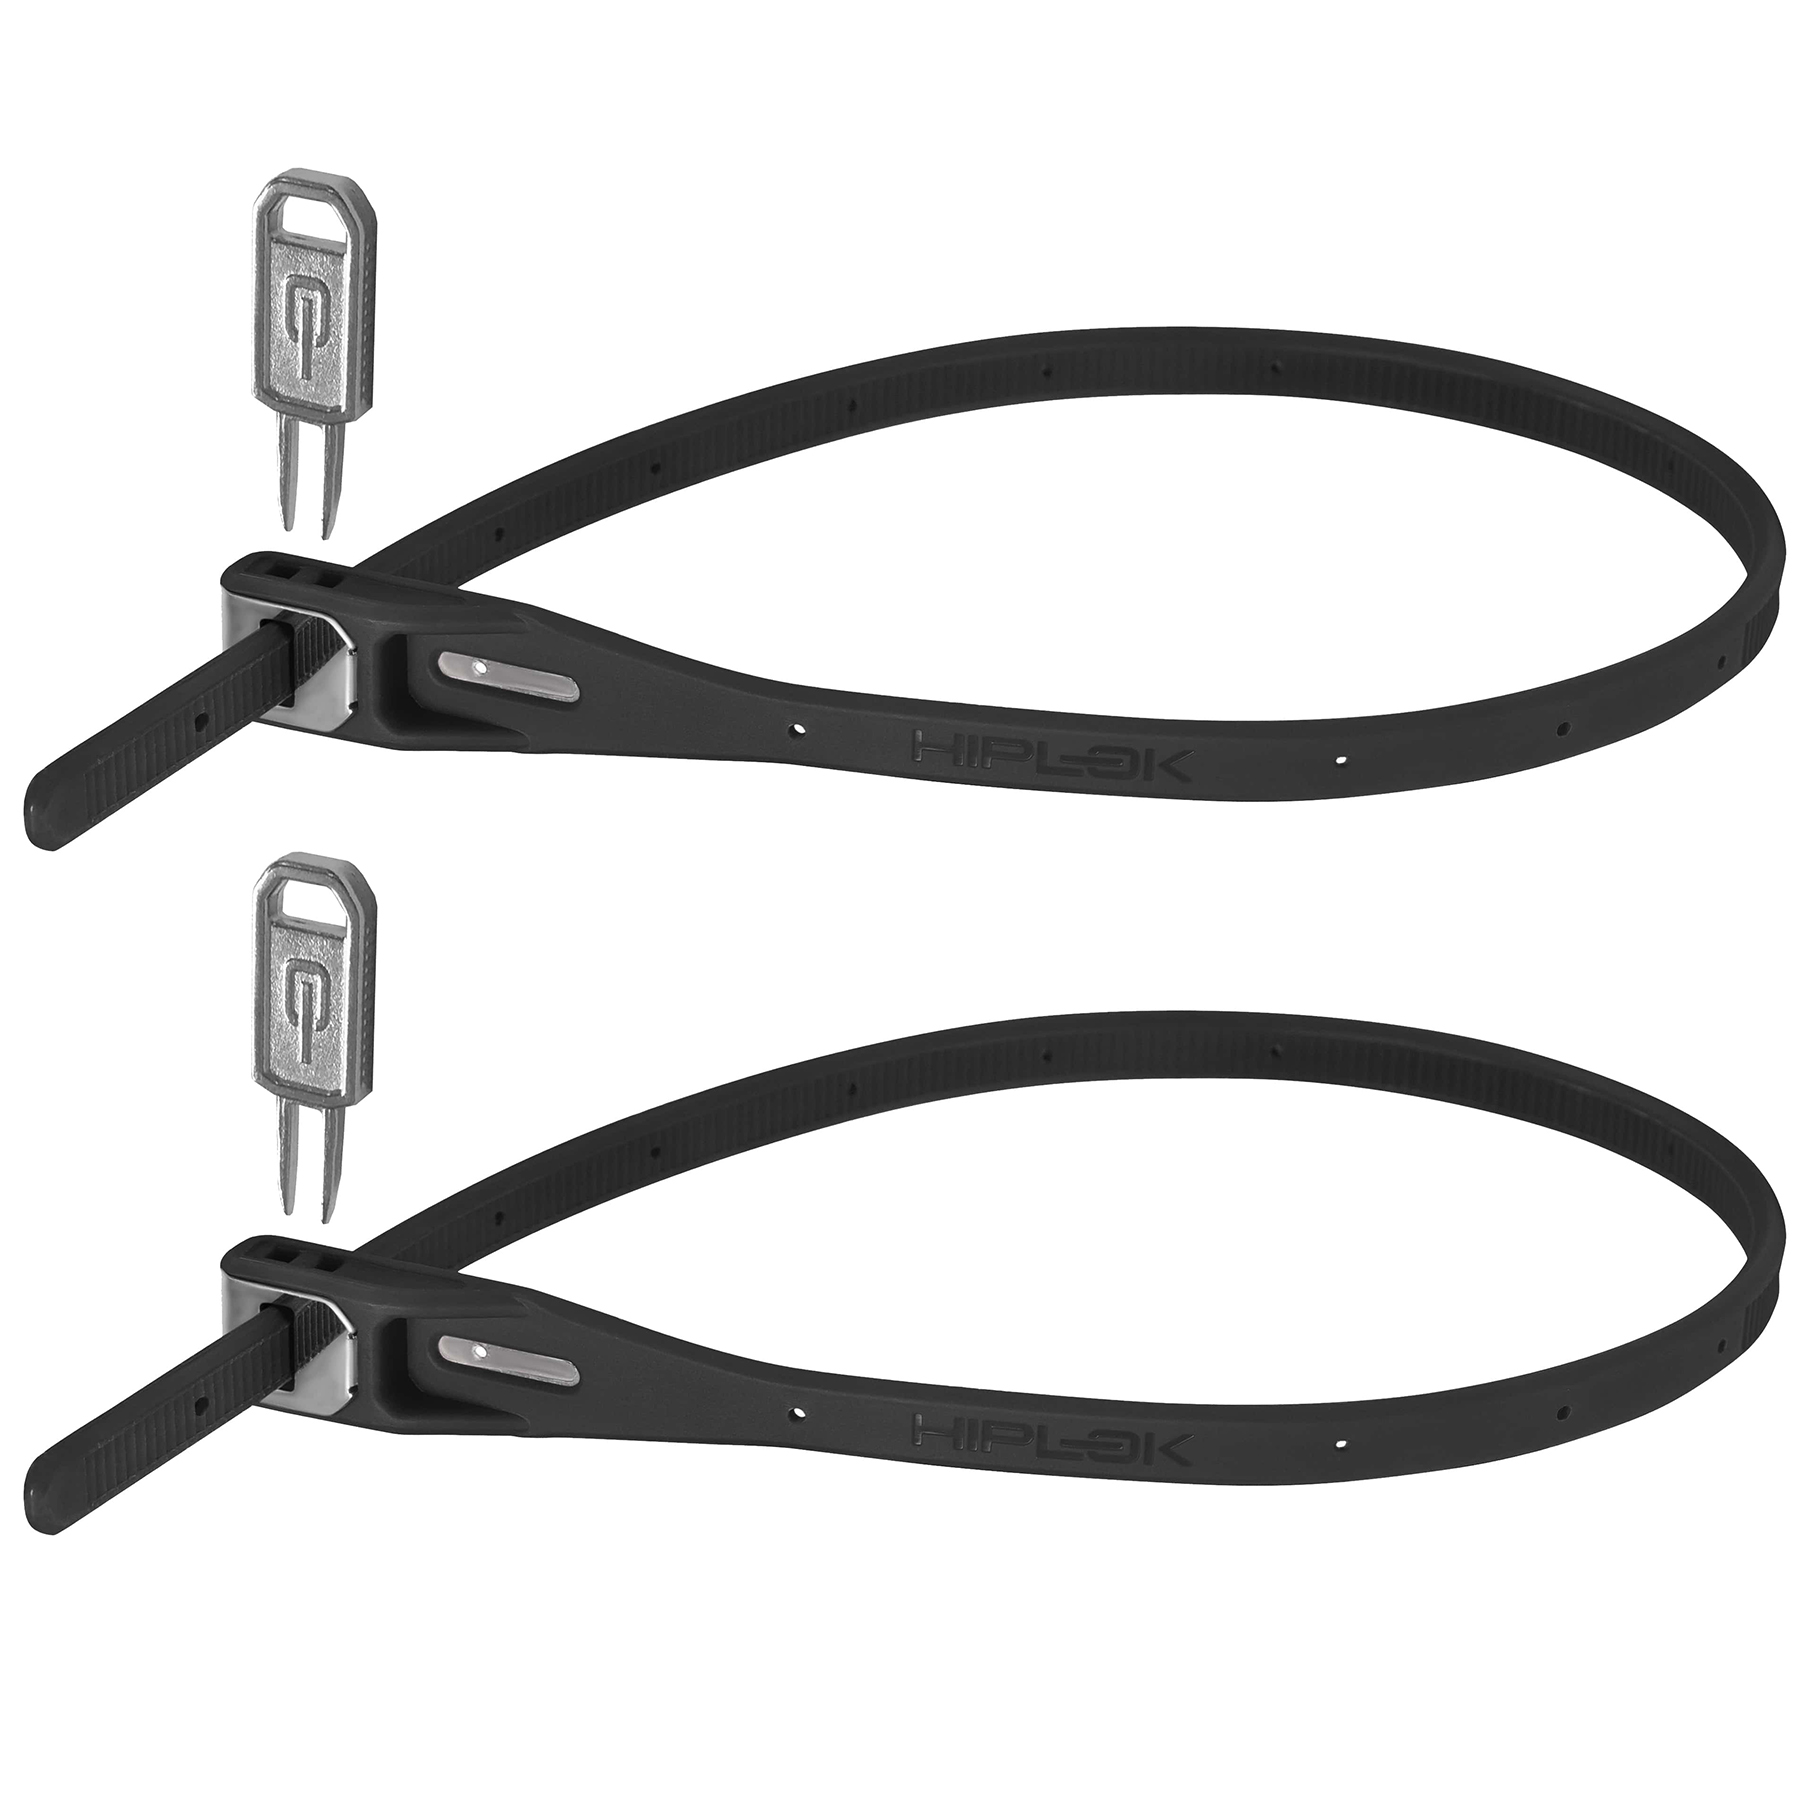 Productfoto van Hiplok Z-Lok Cable Lock - 2 pieces - all black